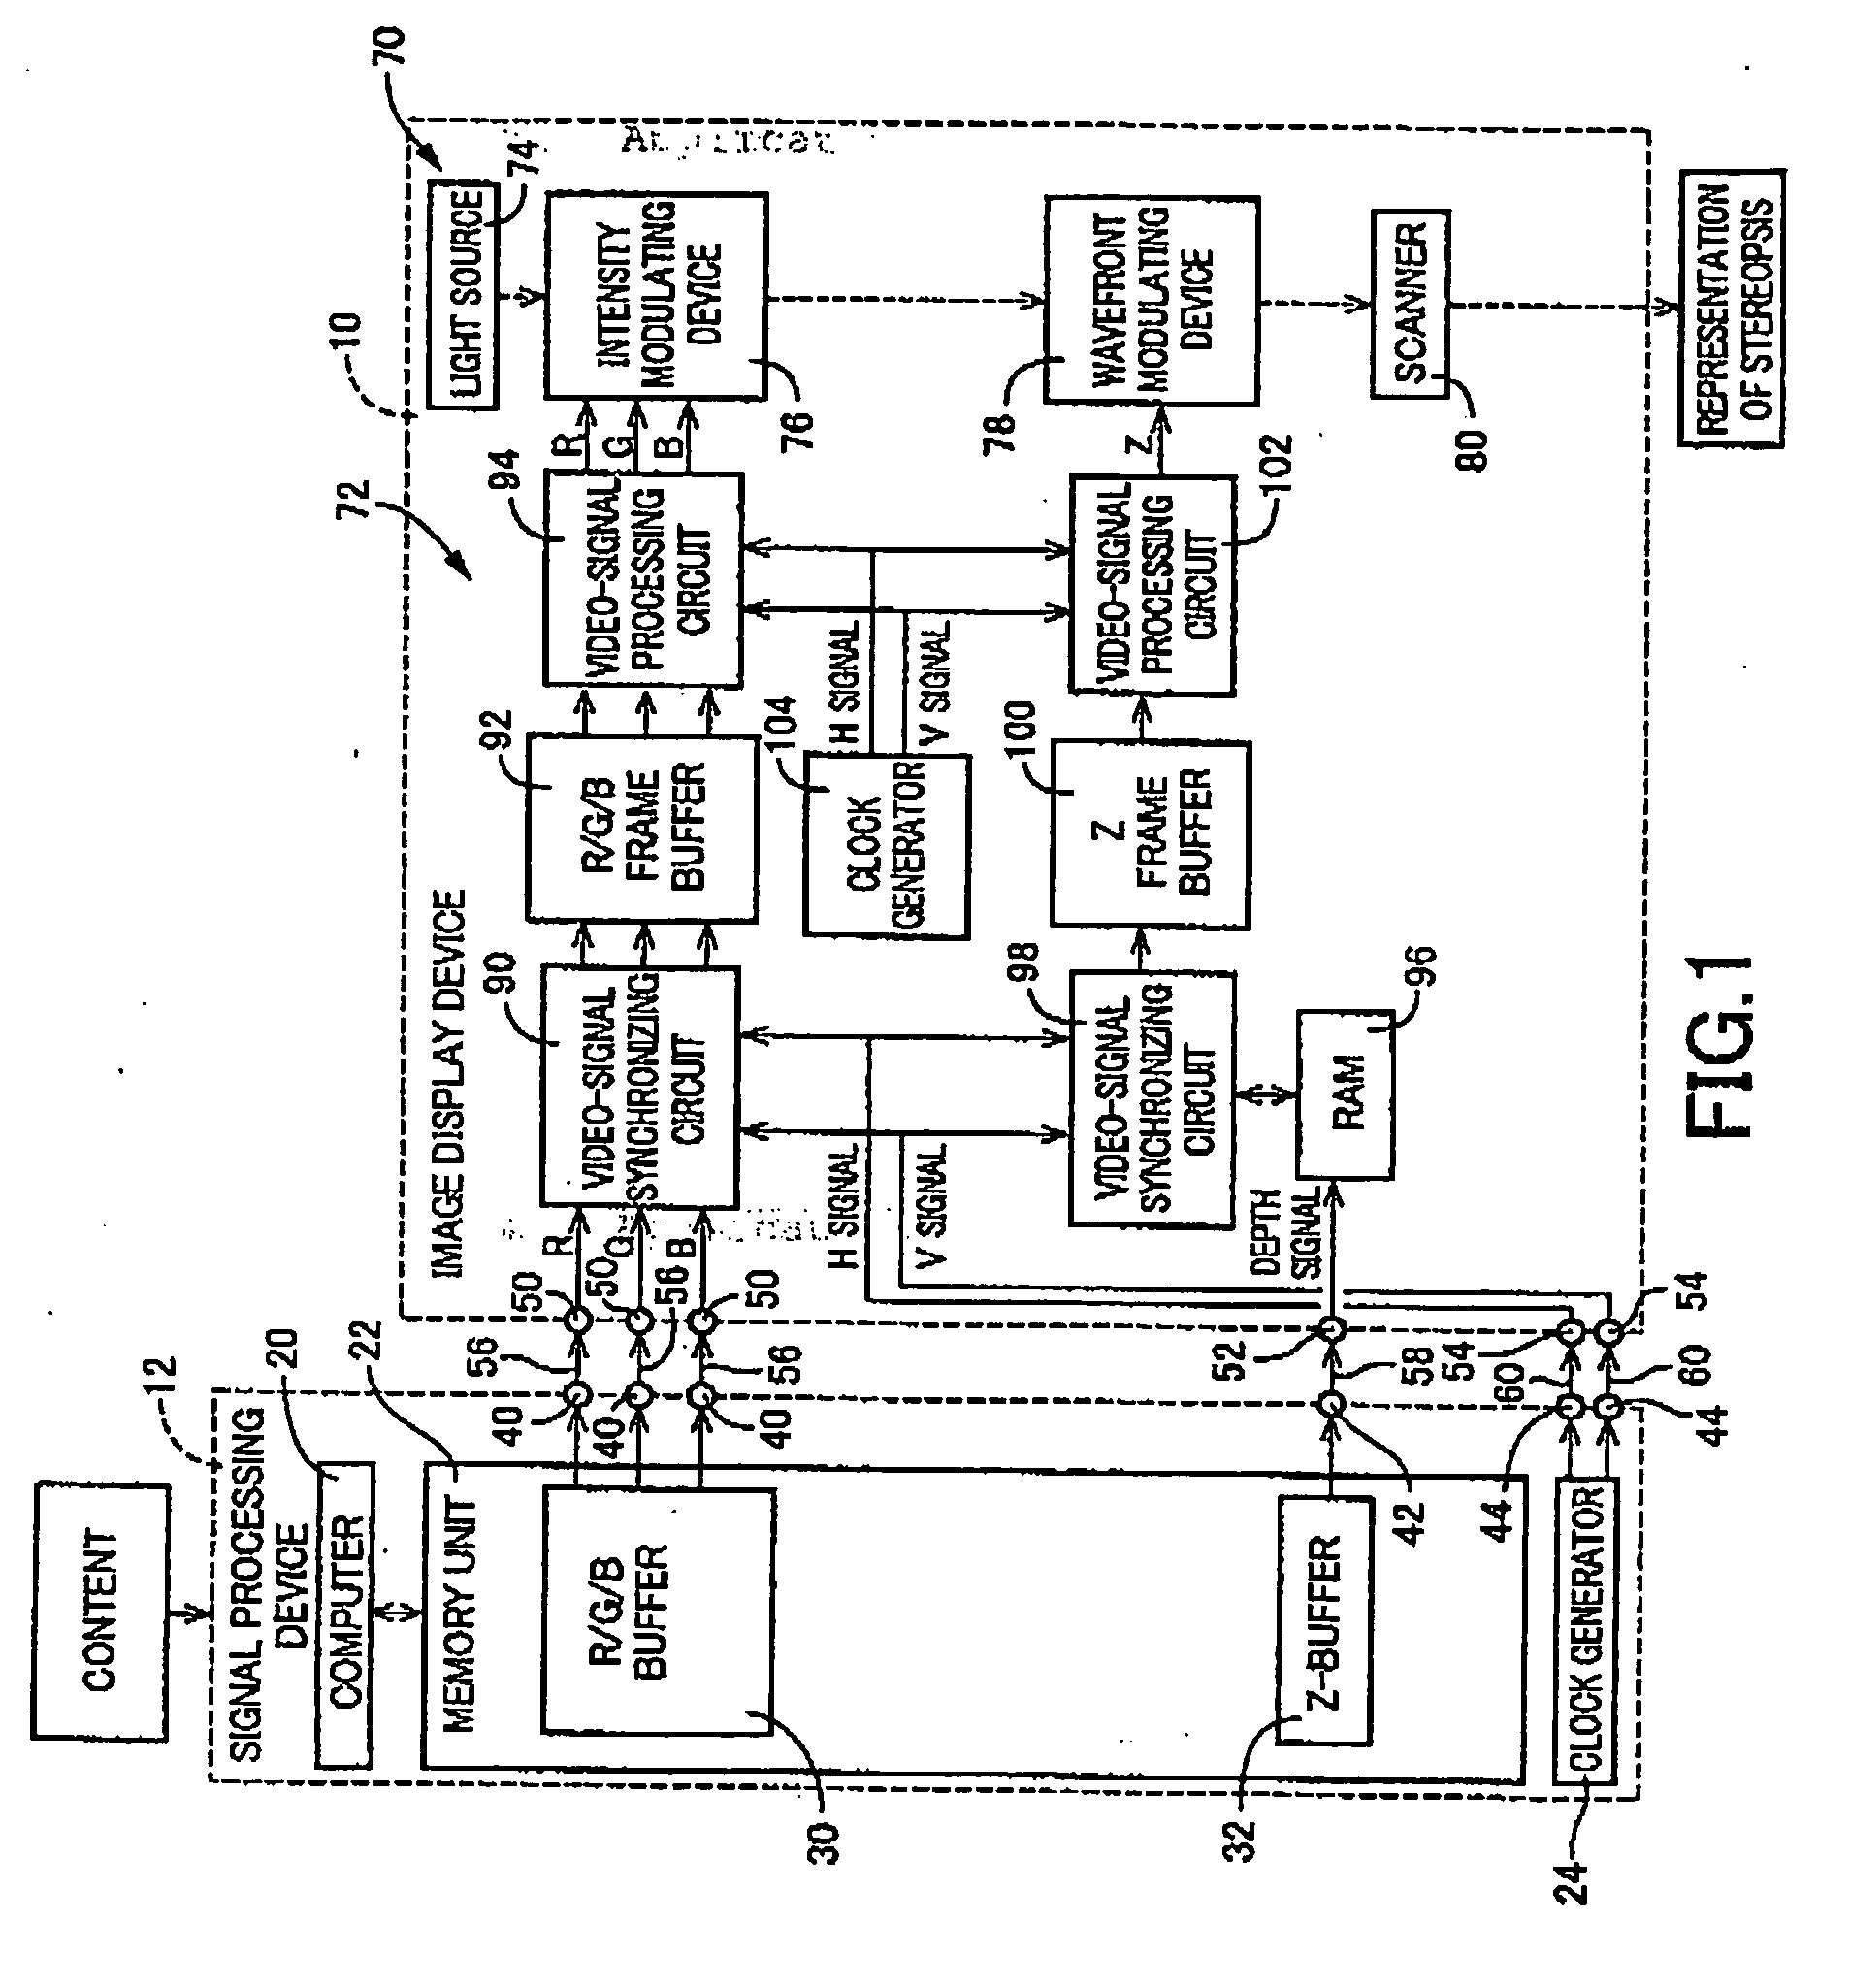 Image display apparatus and signal processing apparatus